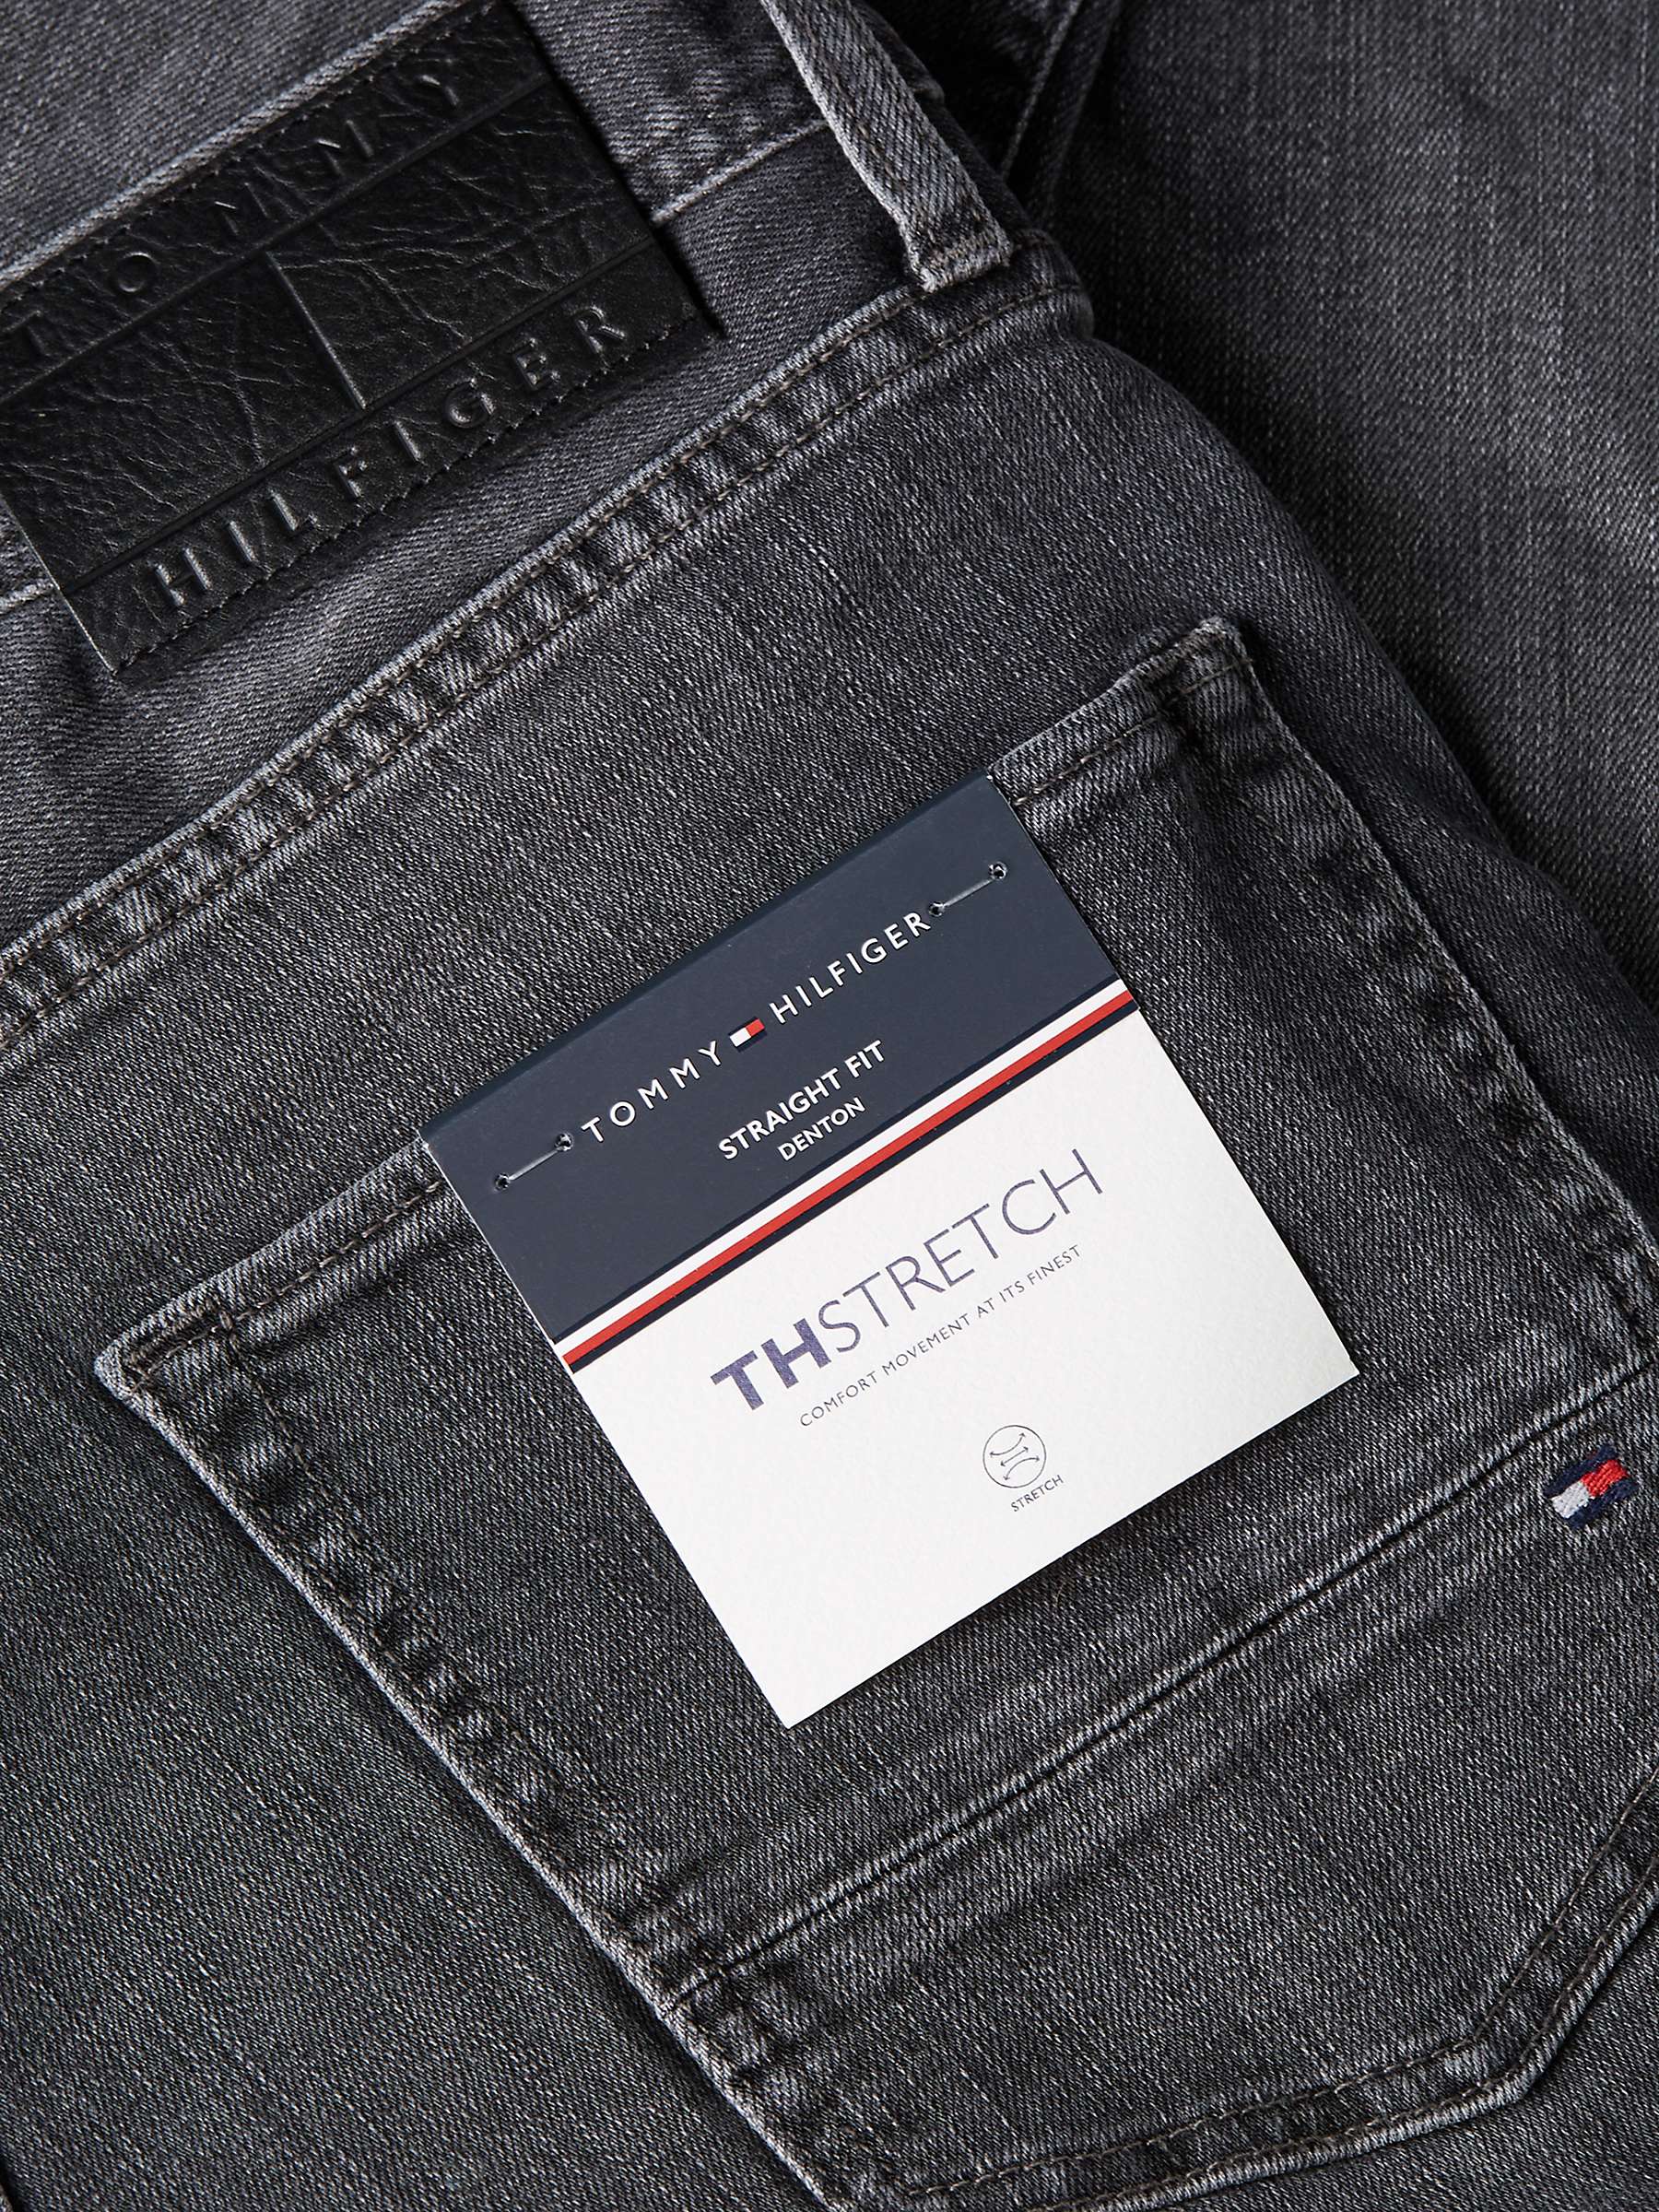 Buy Tommy Hilfiger Denton Straight Jeans Online at johnlewis.com